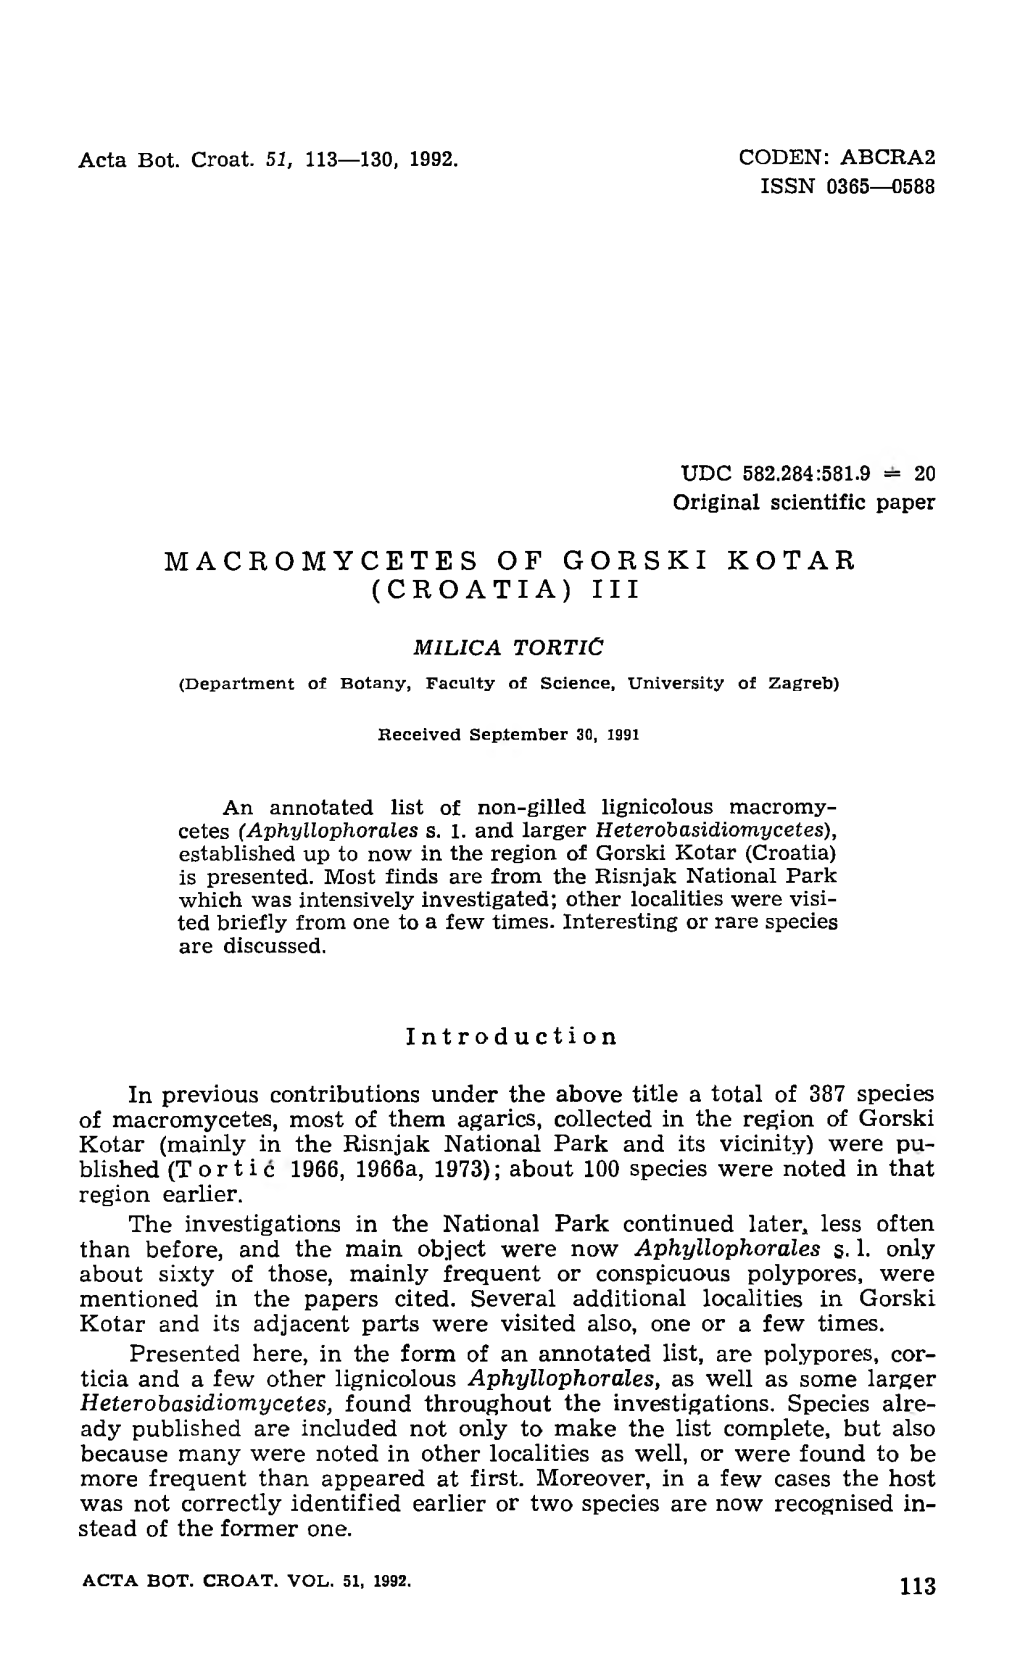 Macromycetes of Gorski Kotar (Croatia) Iii